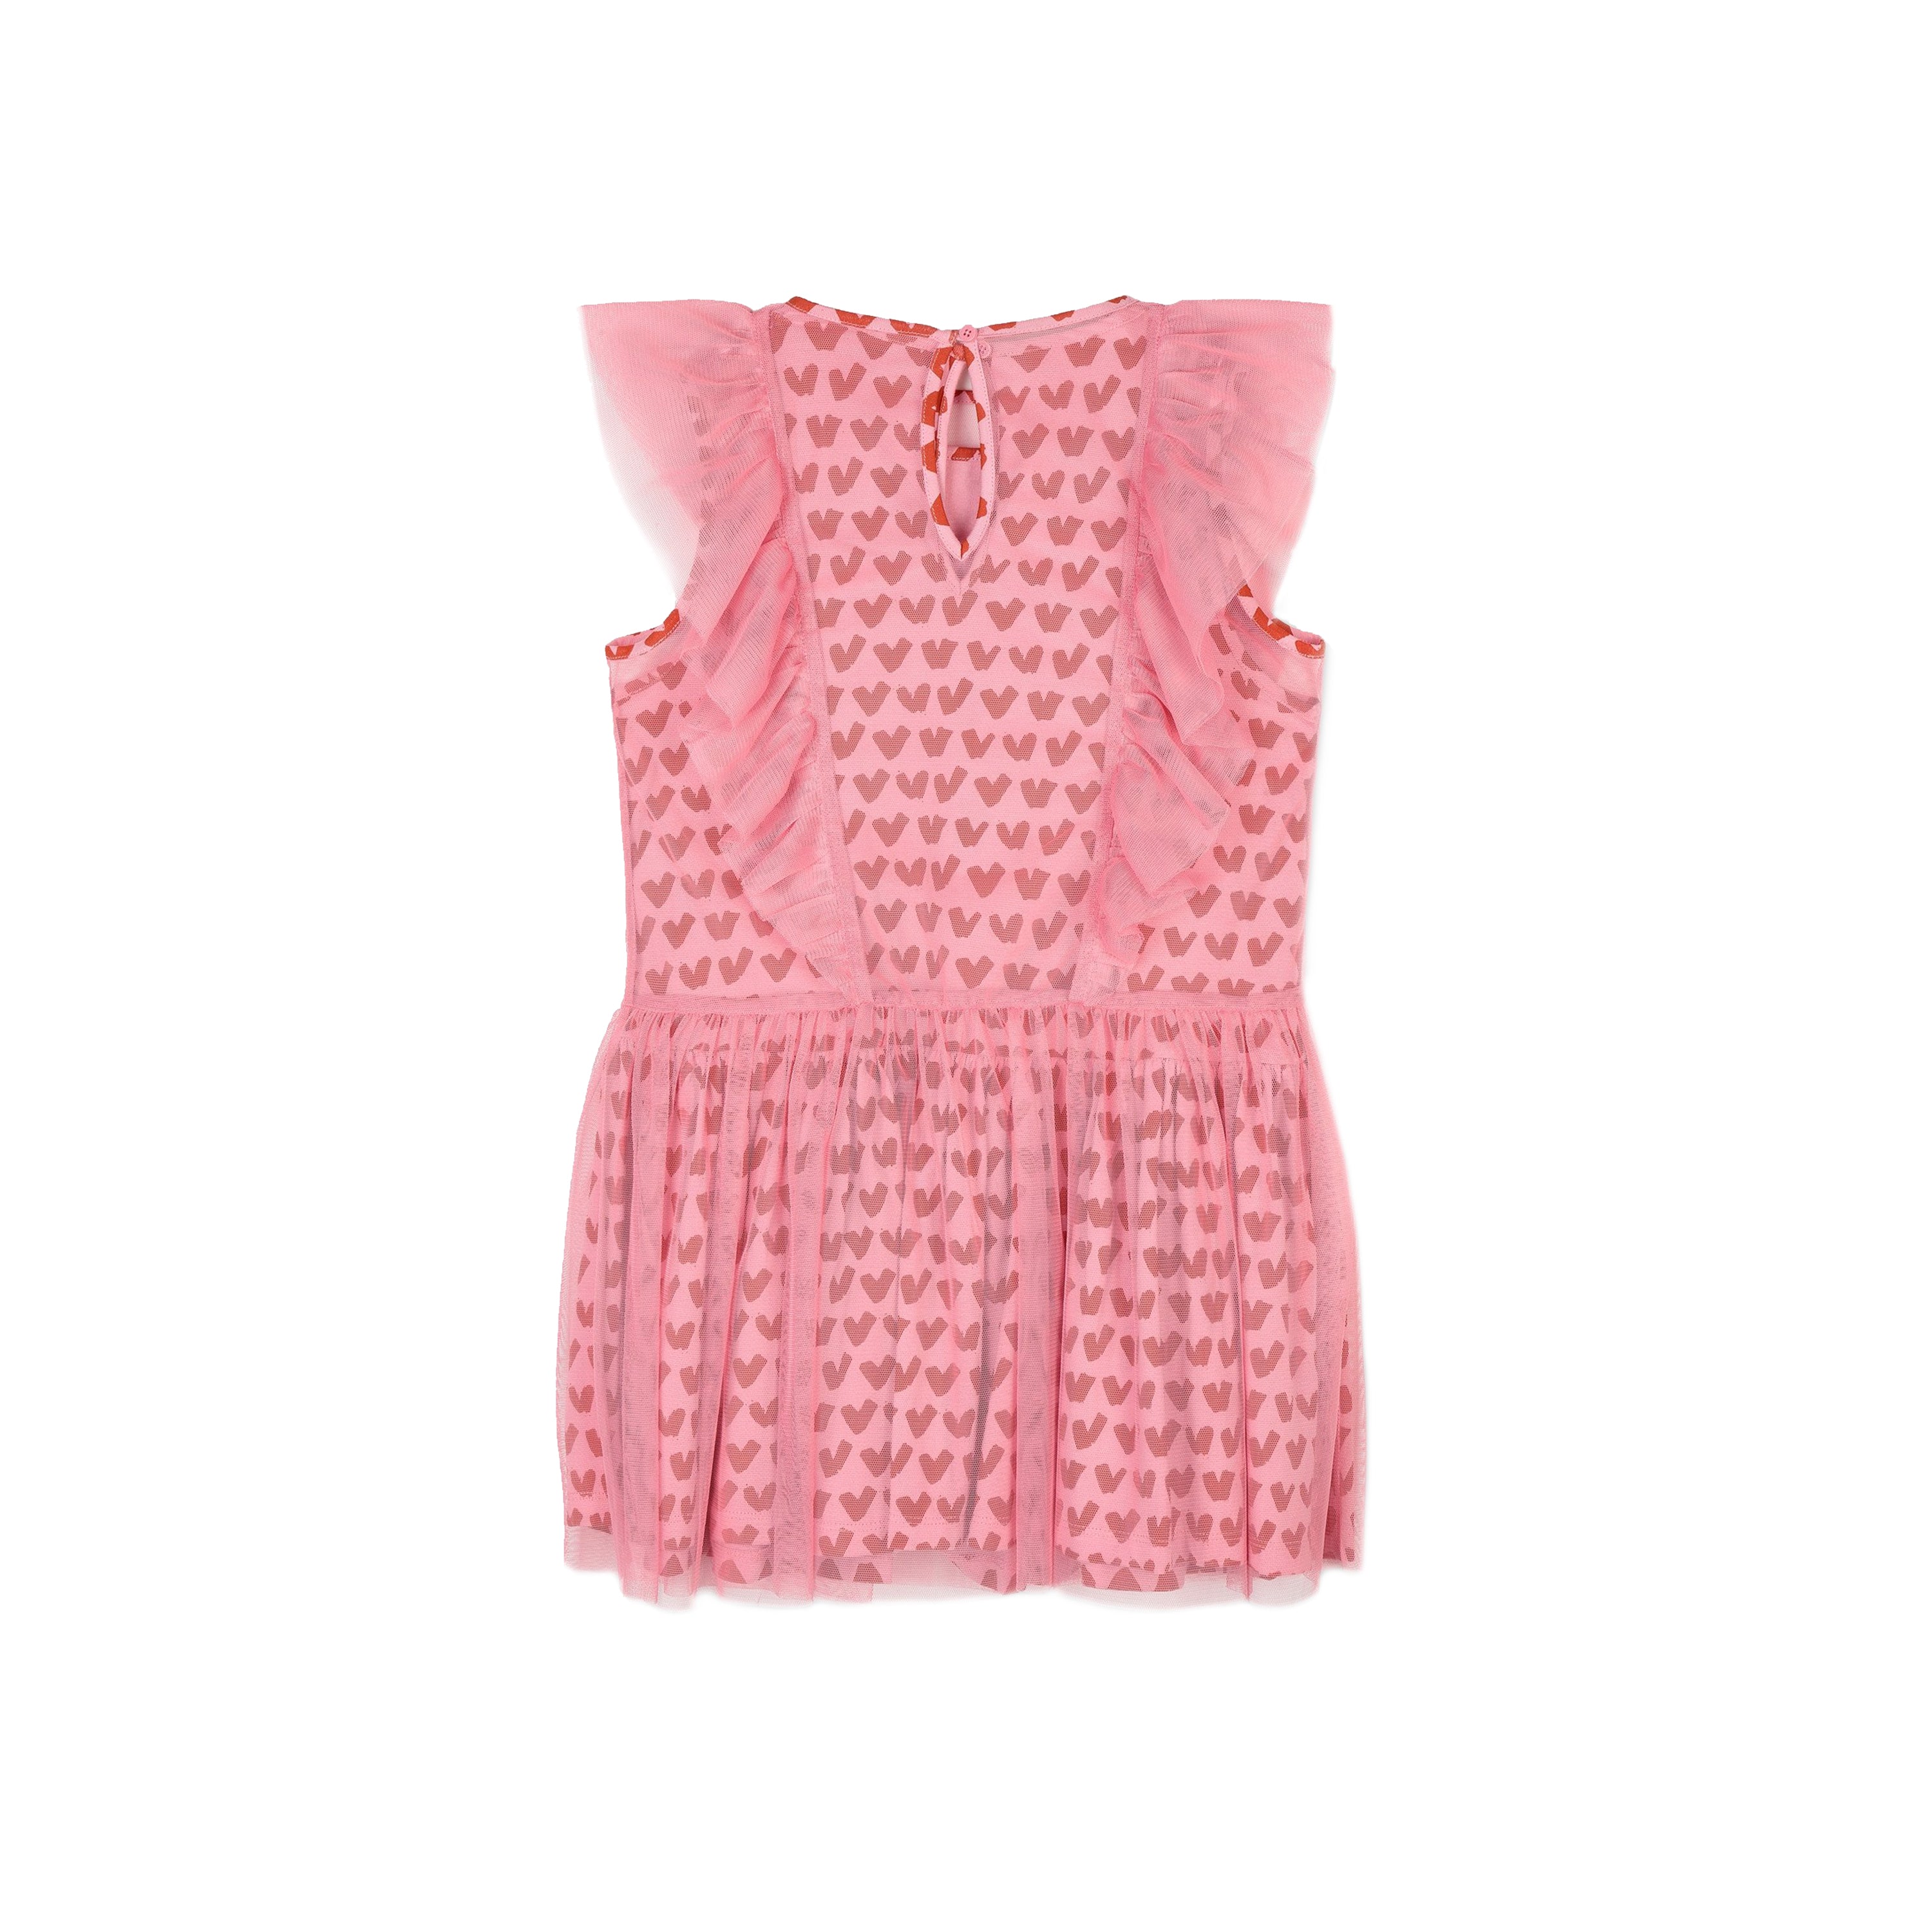 Girls Pink Heart Tulle Dress